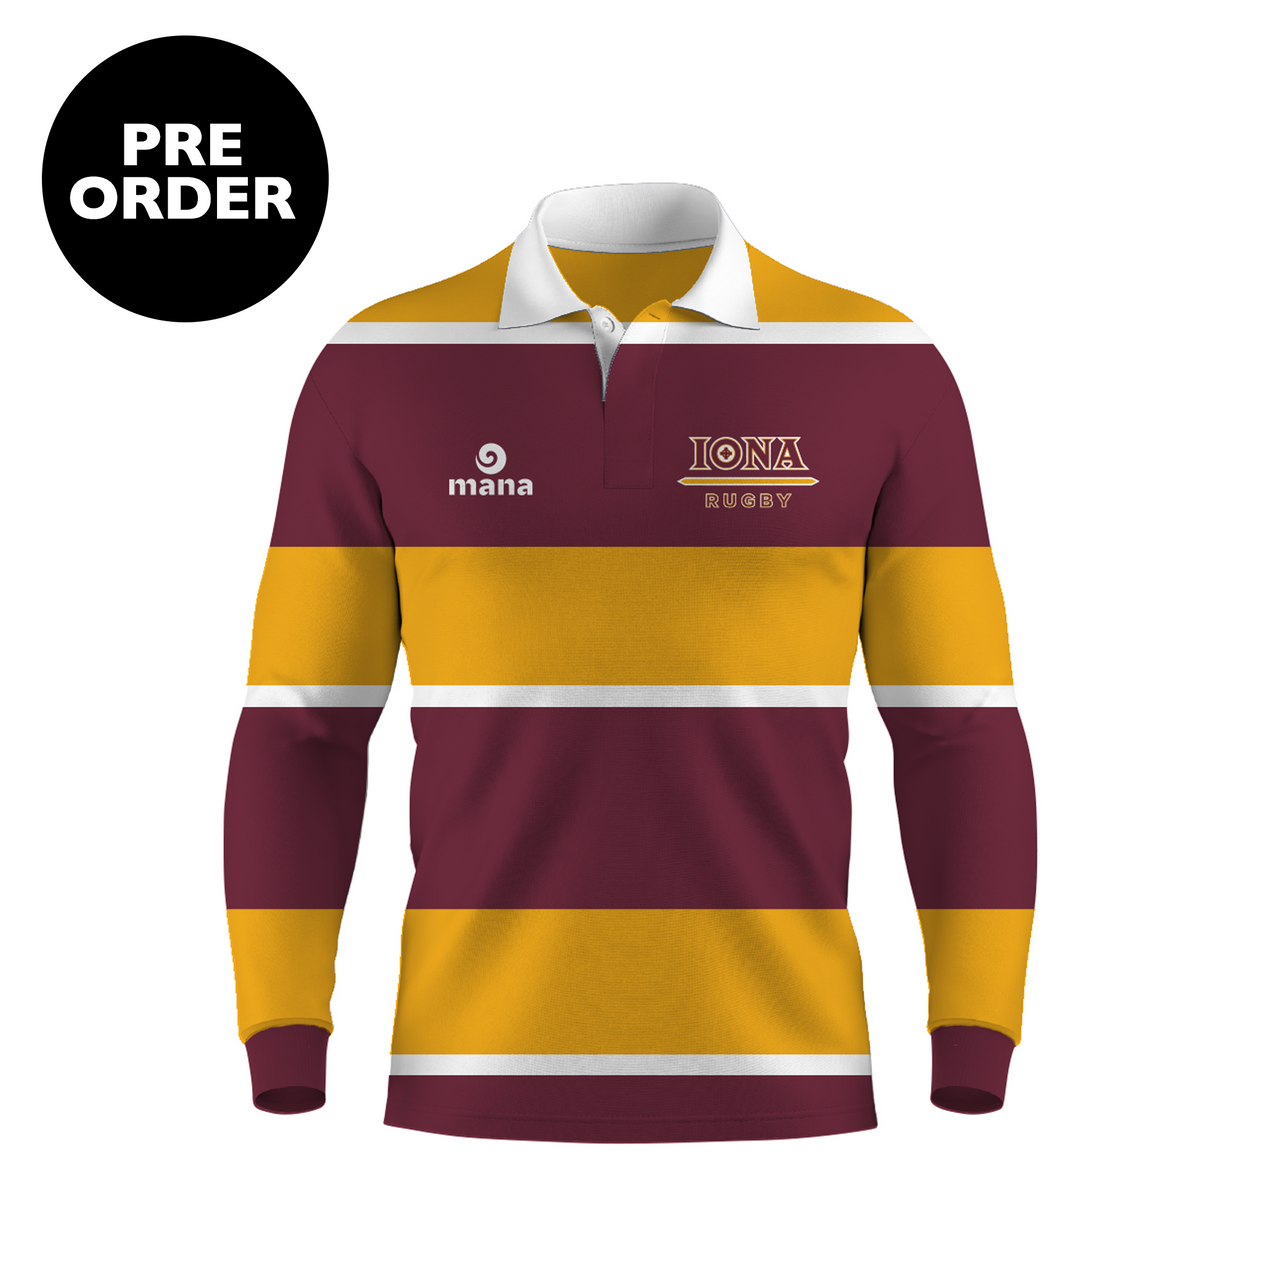 Camiseta clásica de rugby Iona